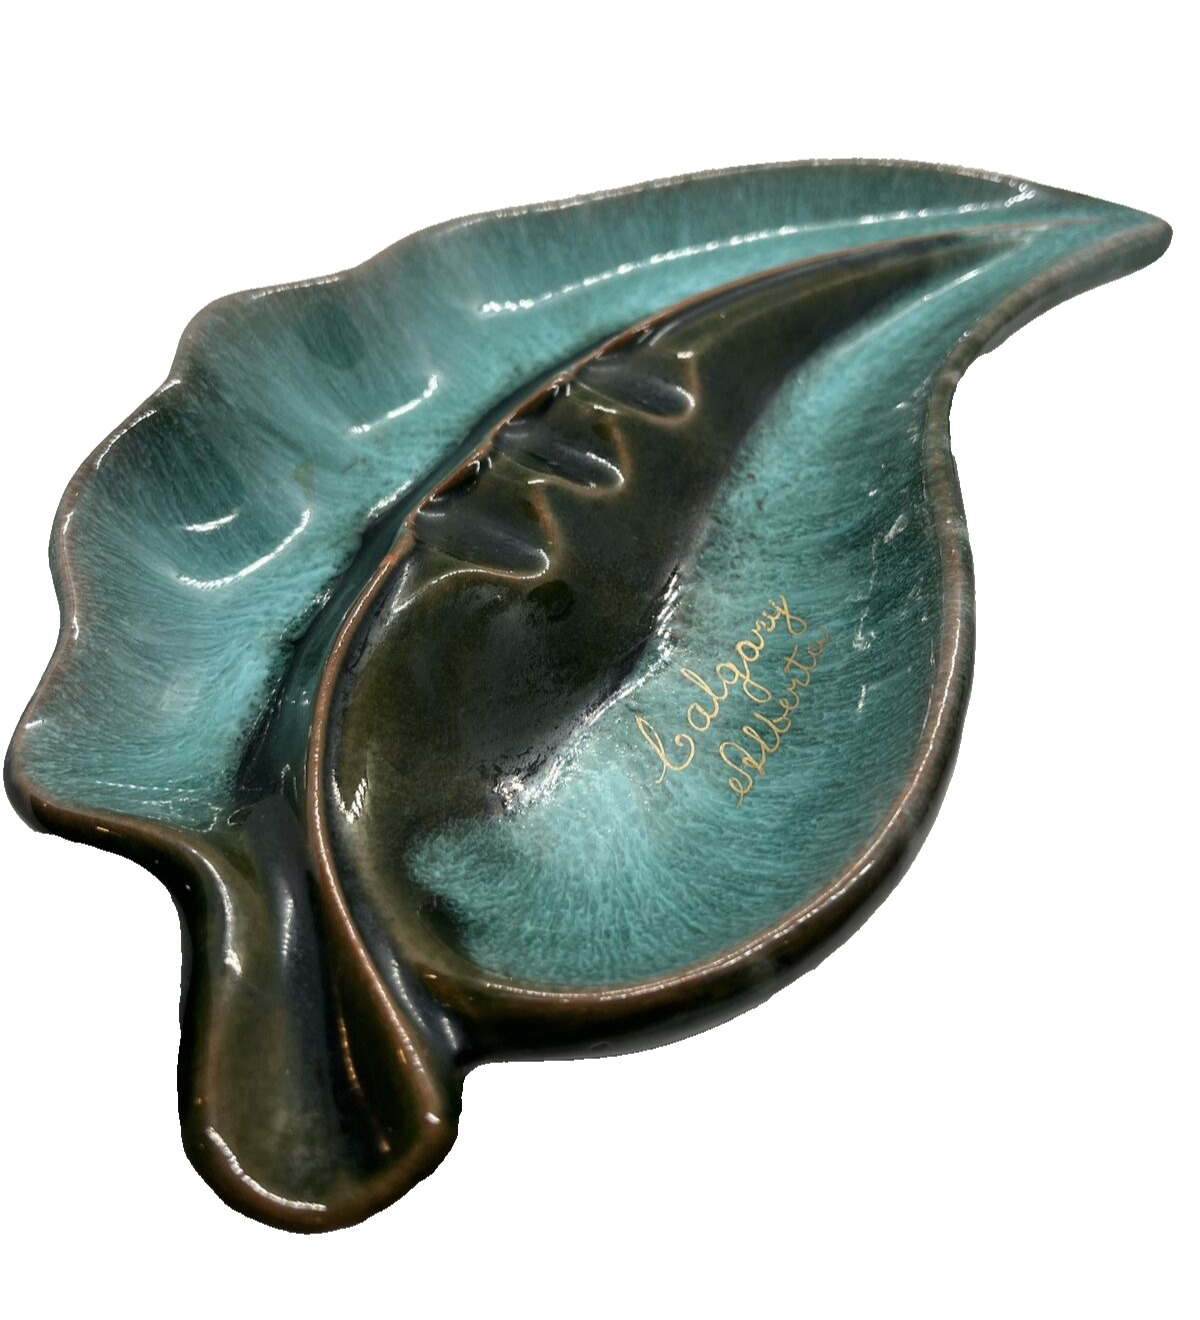 McMaster 37 Canada Leaf Shaped Art Pottery Novelty Ashtray Vintage Blue Green